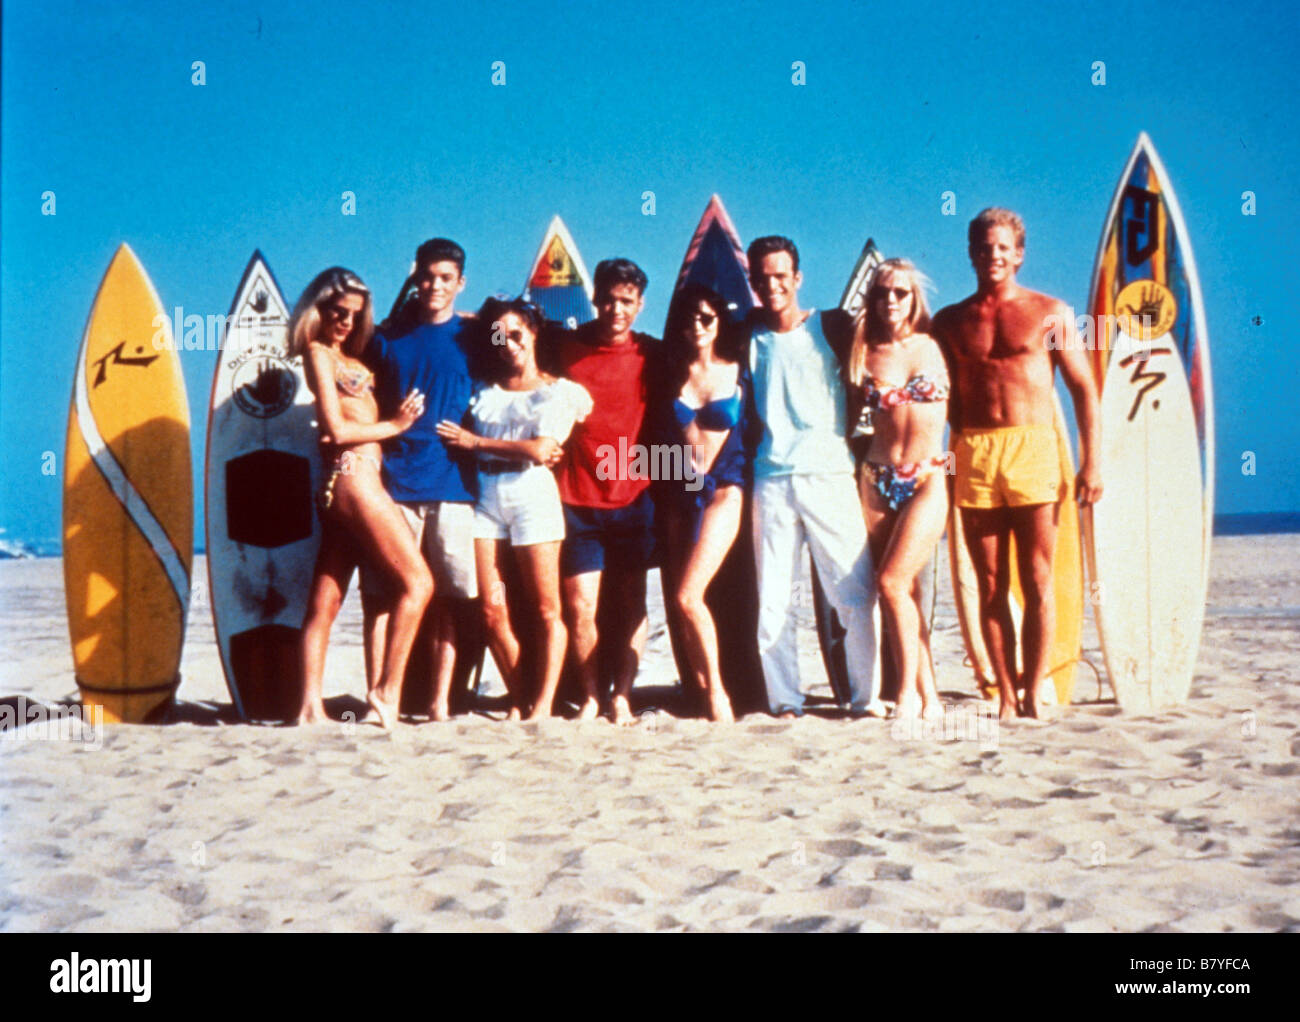 Beverly Hills, 90210 TV-Series 1990-2000 USA Created by Darren Star Shannen Doherty, Jason Priestley, Jennie Garth, Ian Ziering, Luke Perry, Brian Austin Green, Tori Spelling Stock Photo